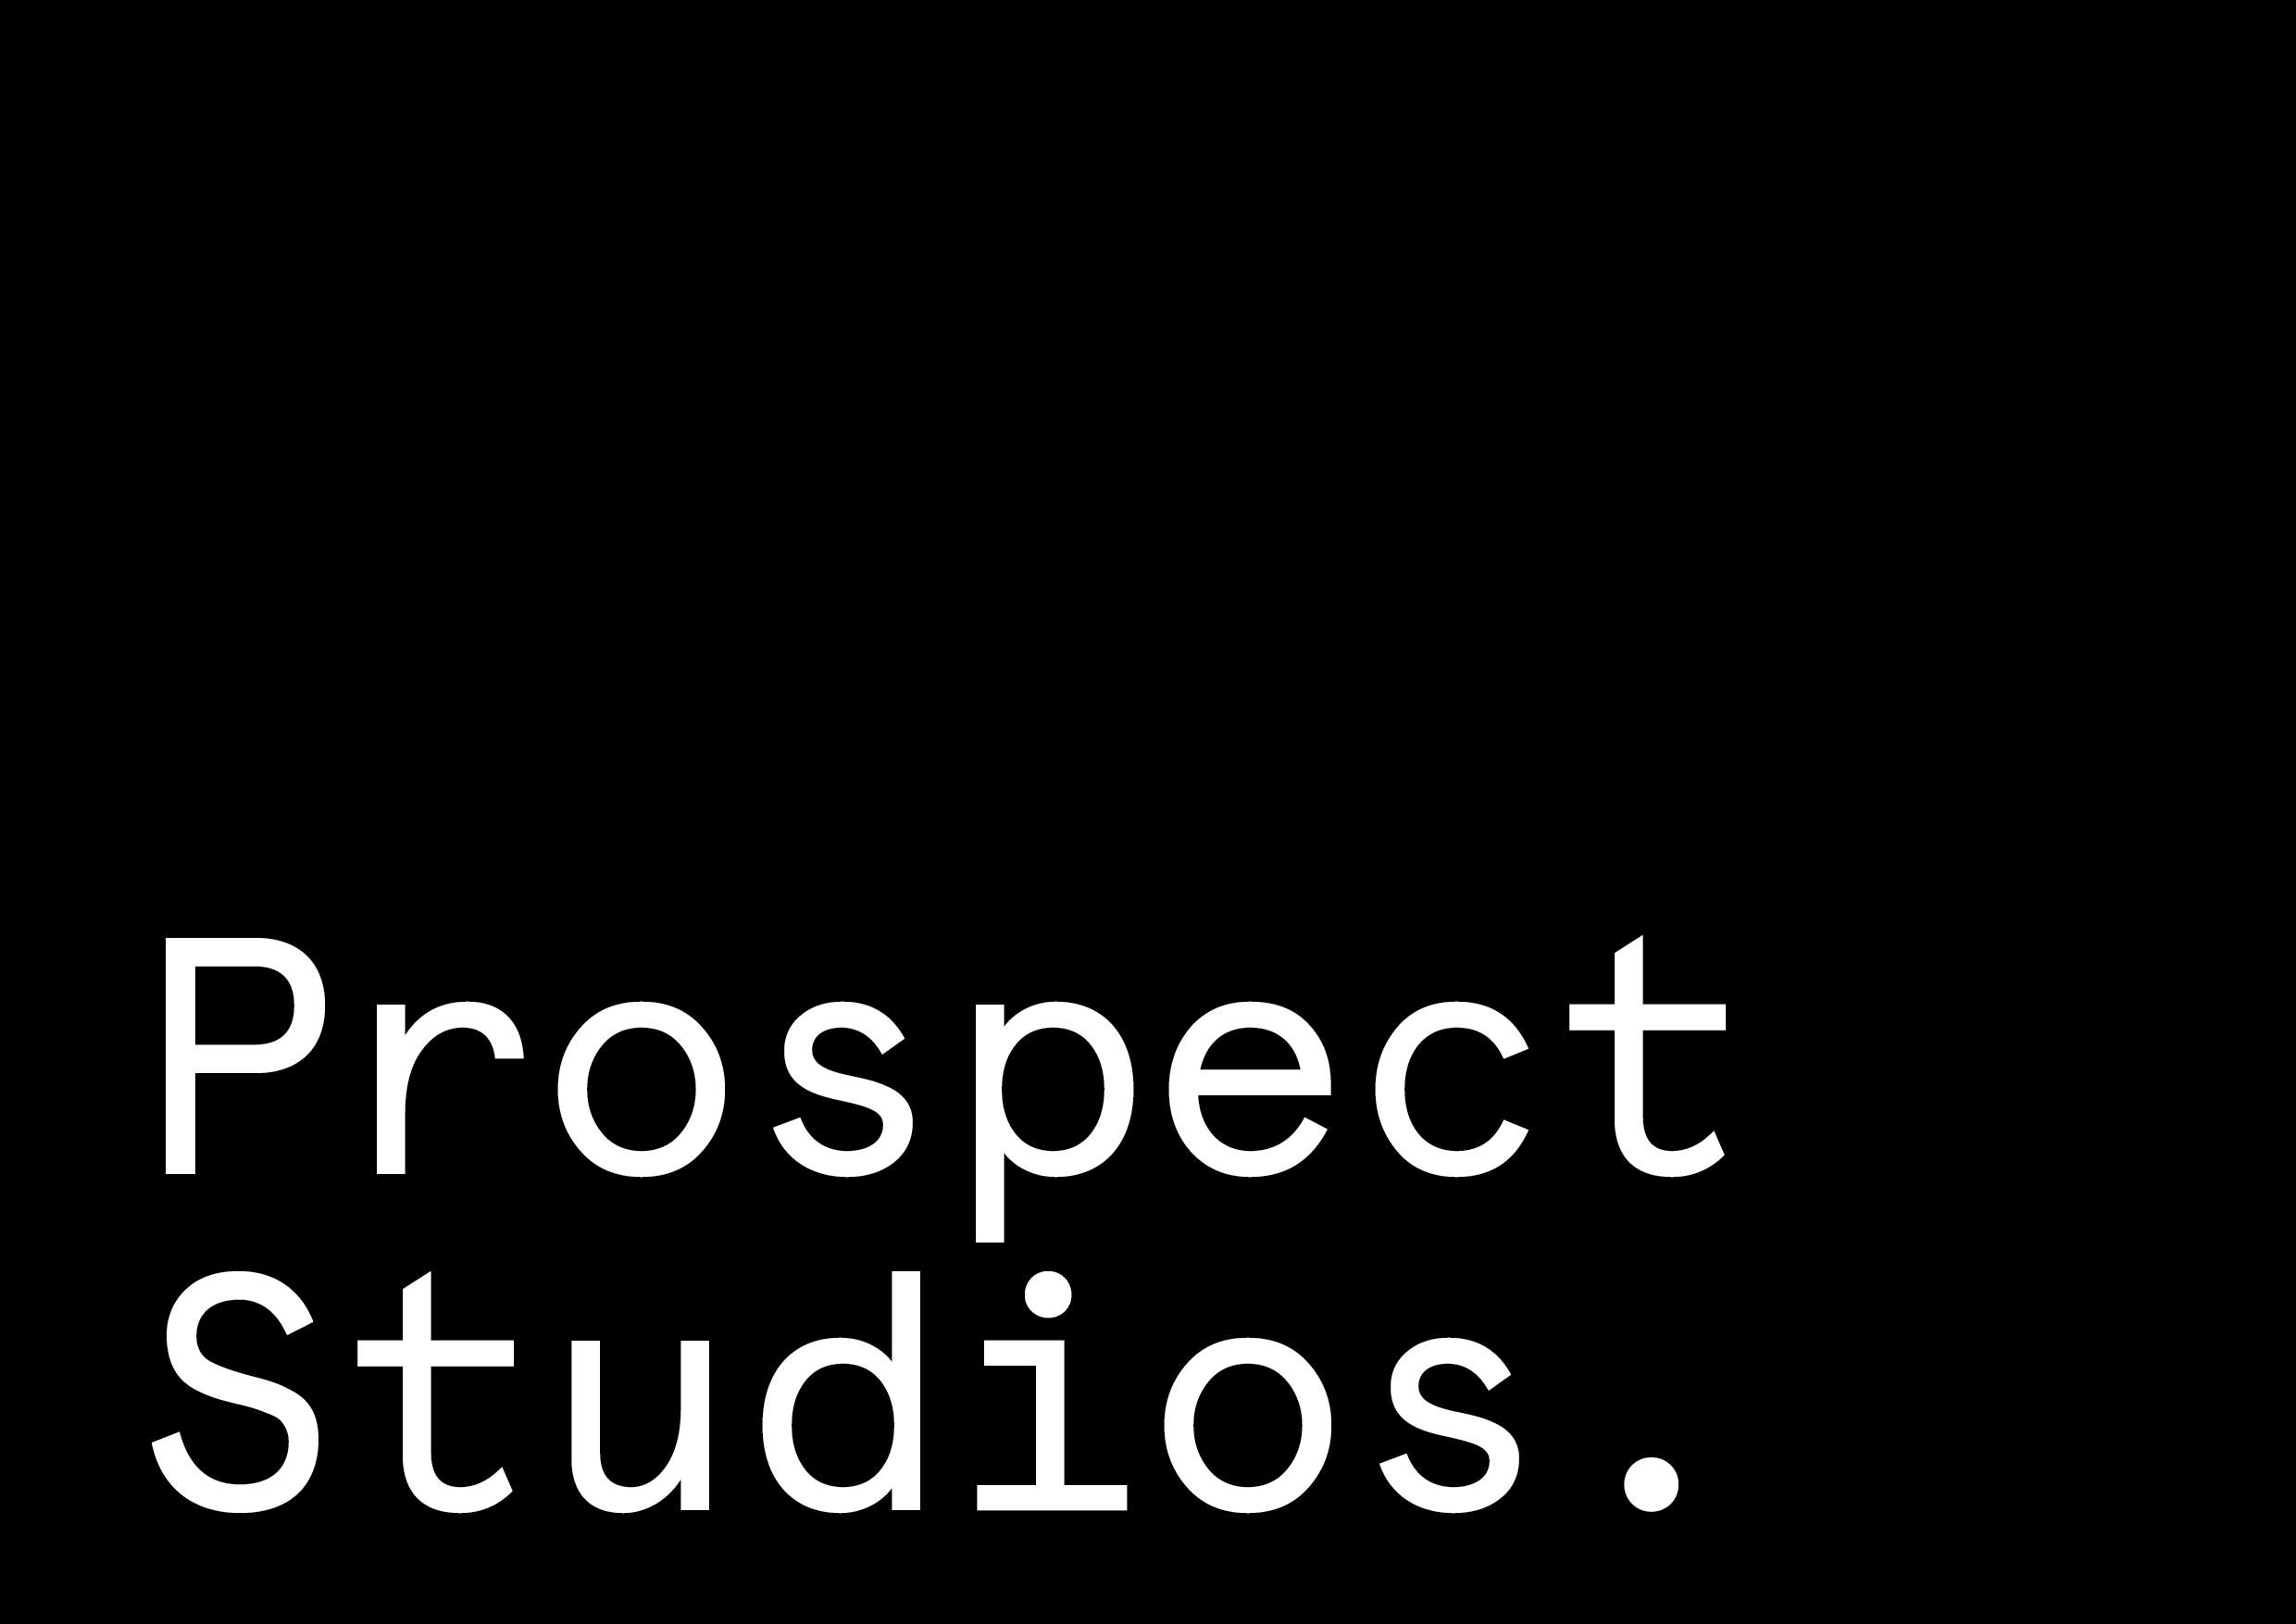 Prospect Studios CS initial-02.jpg